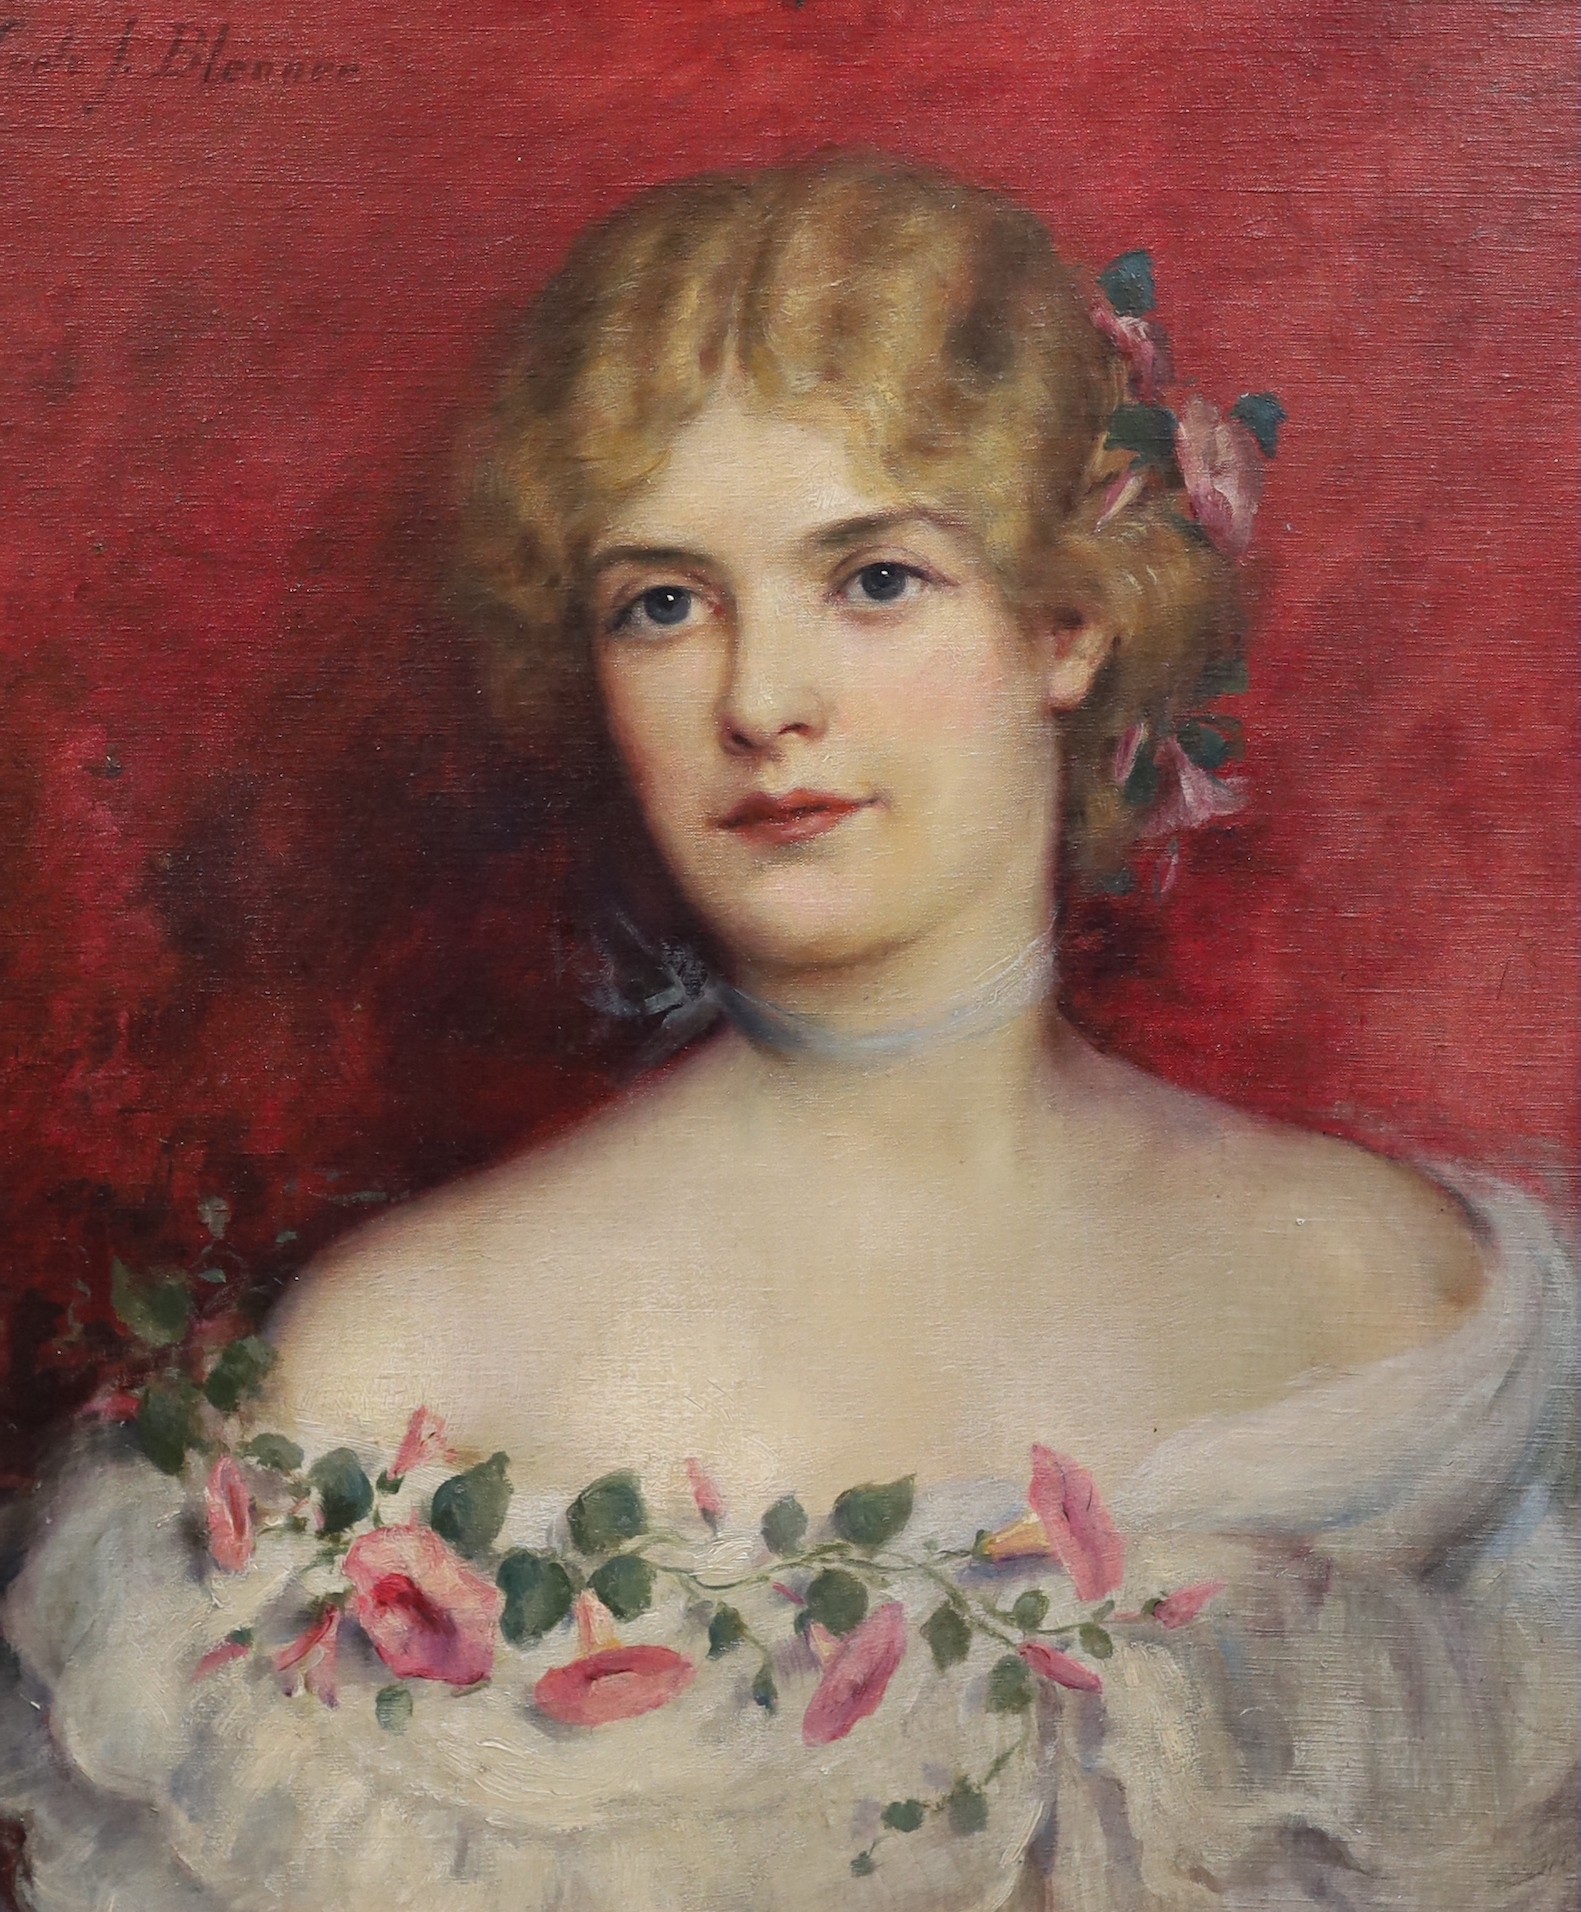 Carle John Blenner (American, 1862-1952), Portrait of a lady, oil on canvas board, 60 x 50cm